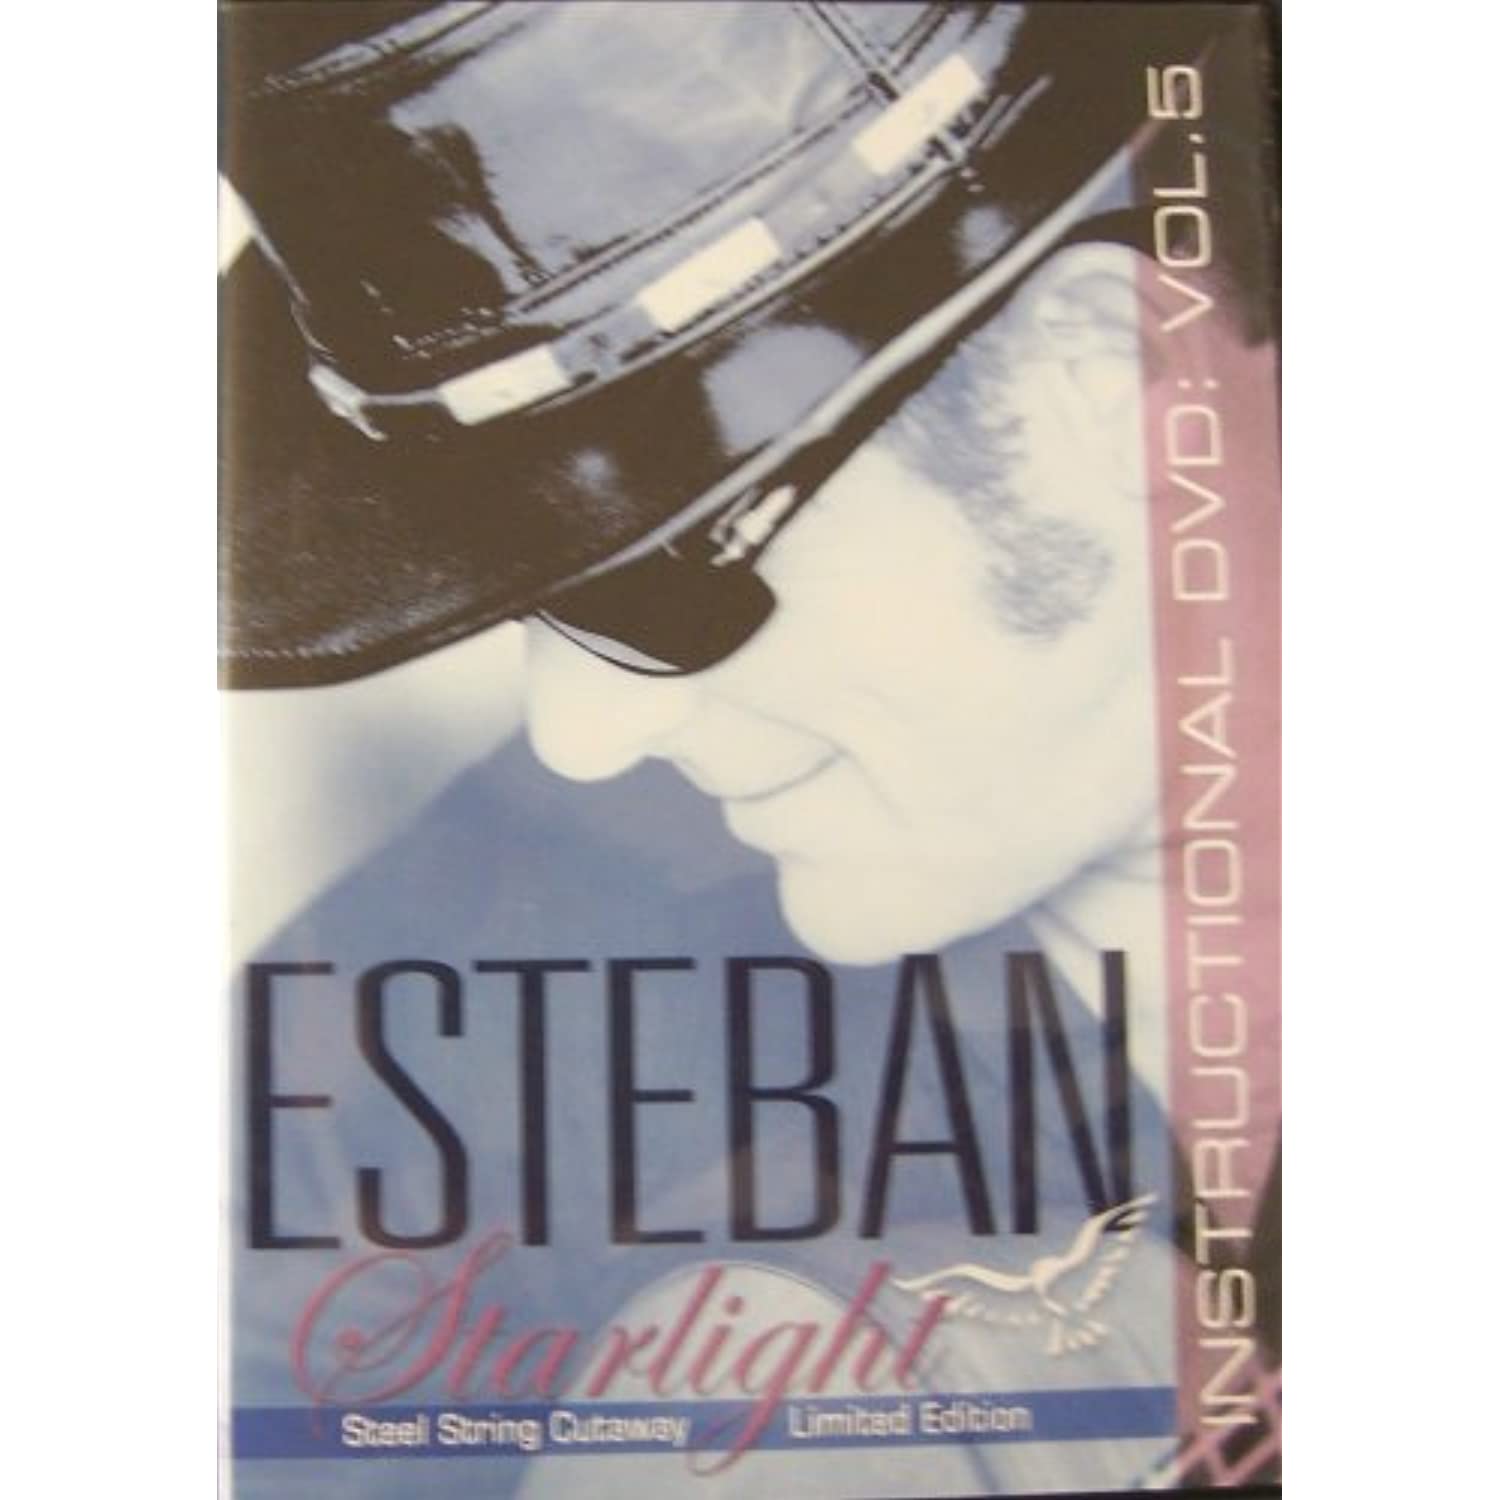 Esteban Starlight Instructional Volume 5 DVD